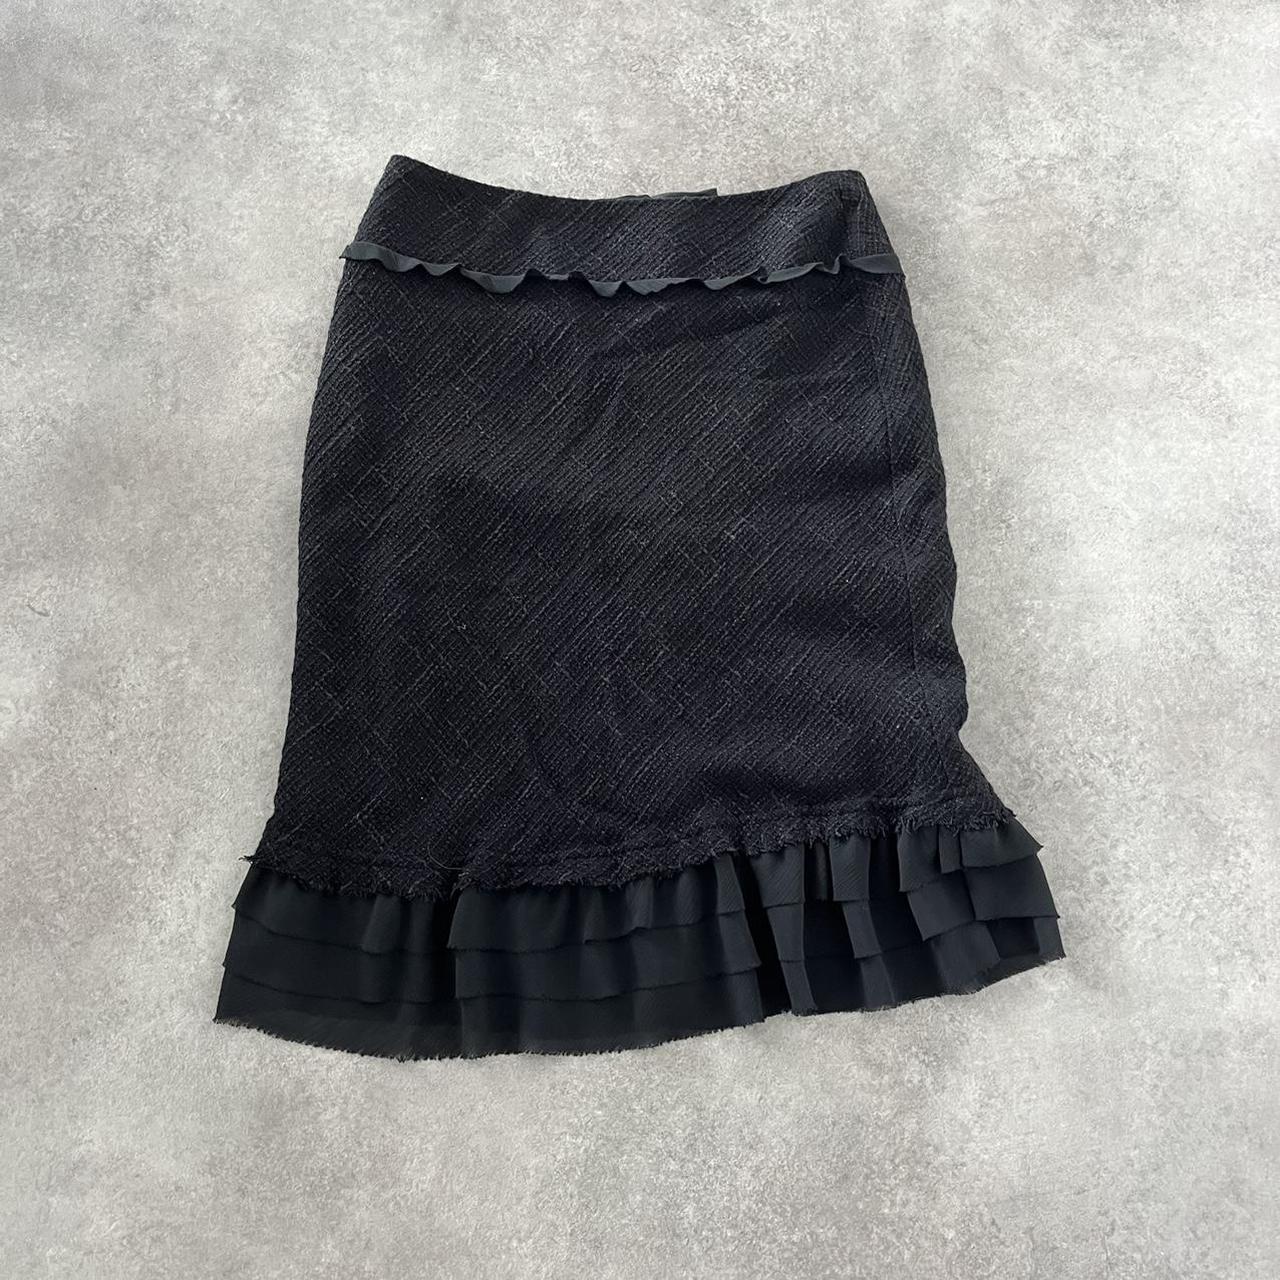 Black frilly midi skirt Soft grunge Recommend size... - Depop